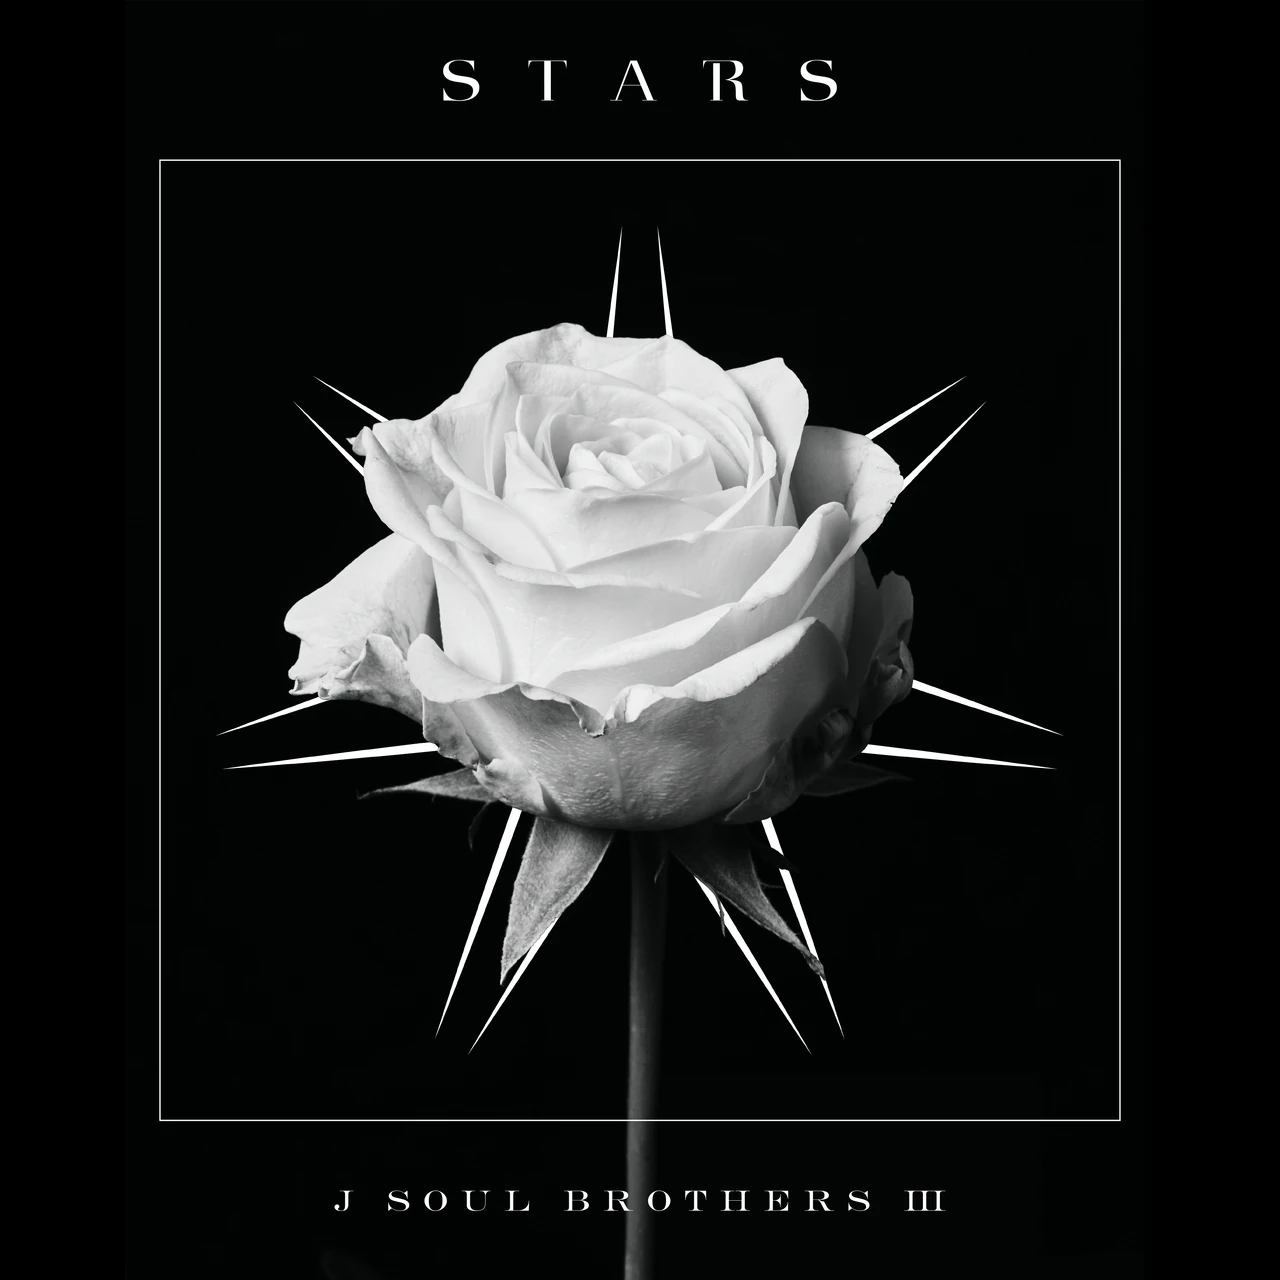 J SOUL BROTHERS III — STARS cover artwork